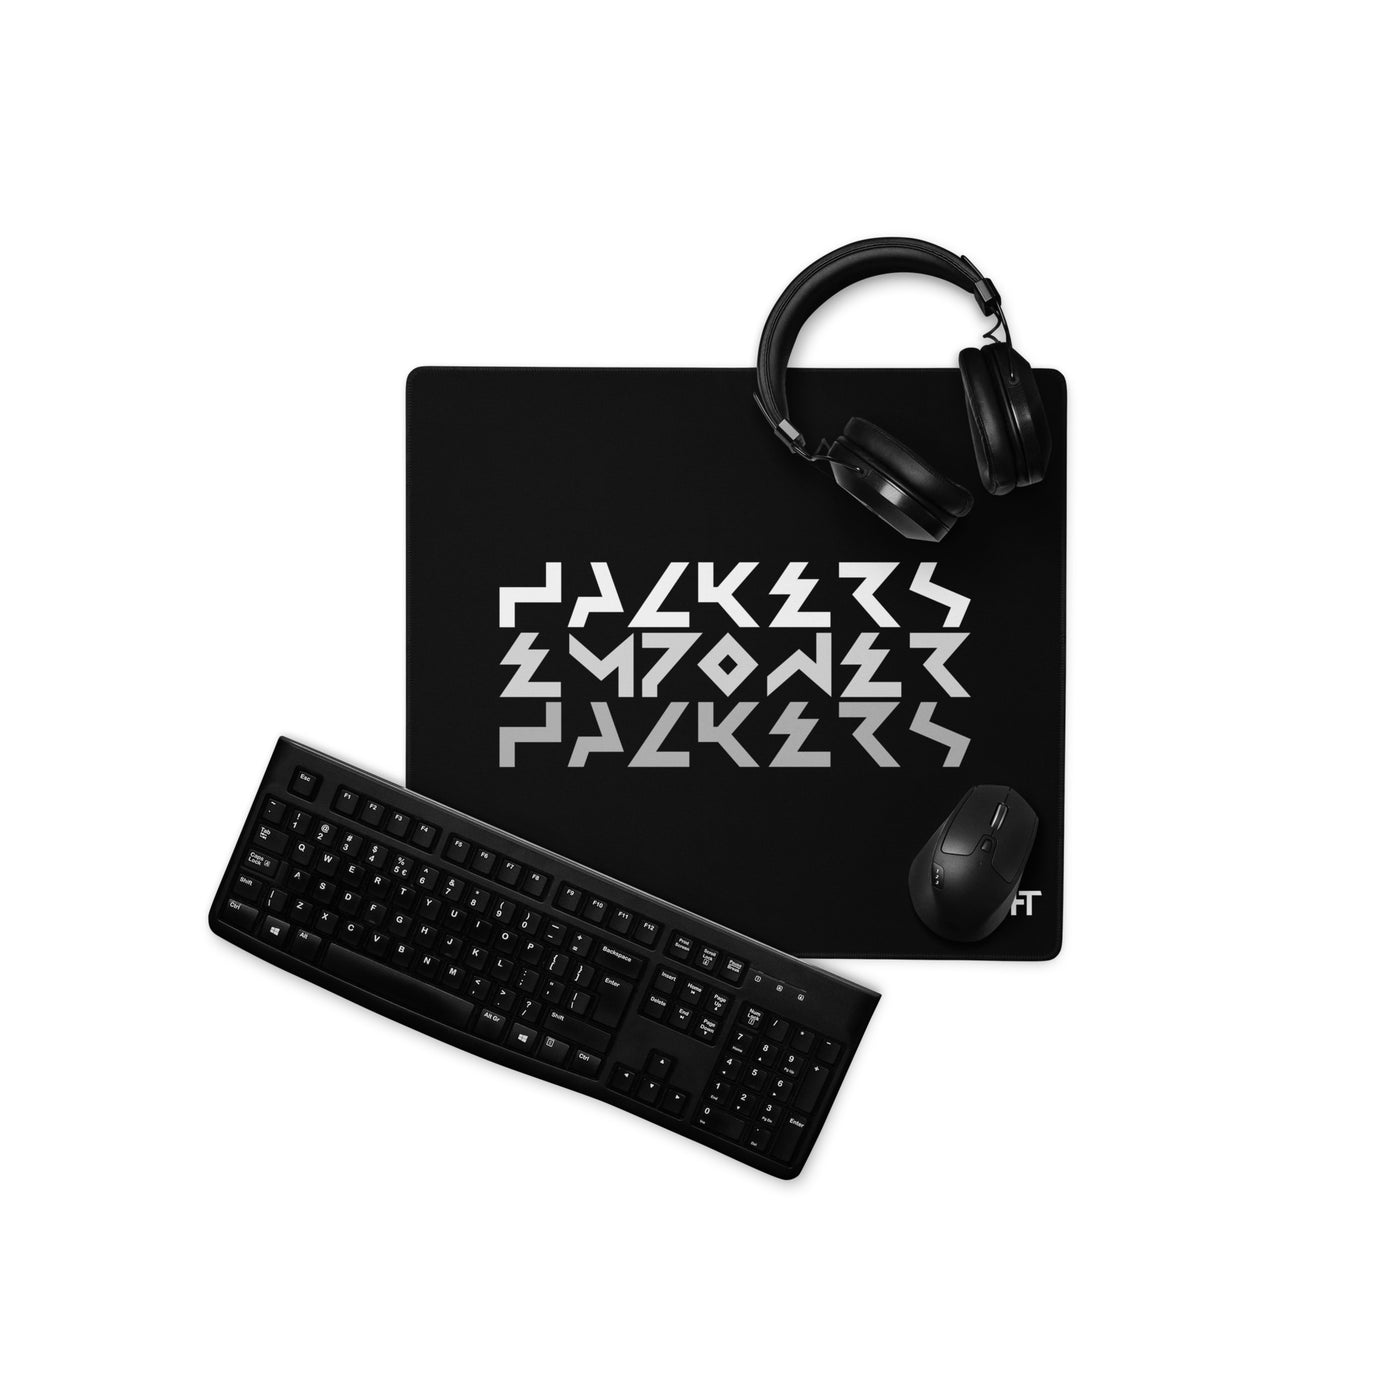 Hackers Empower Hackers V4 - Desk Mat